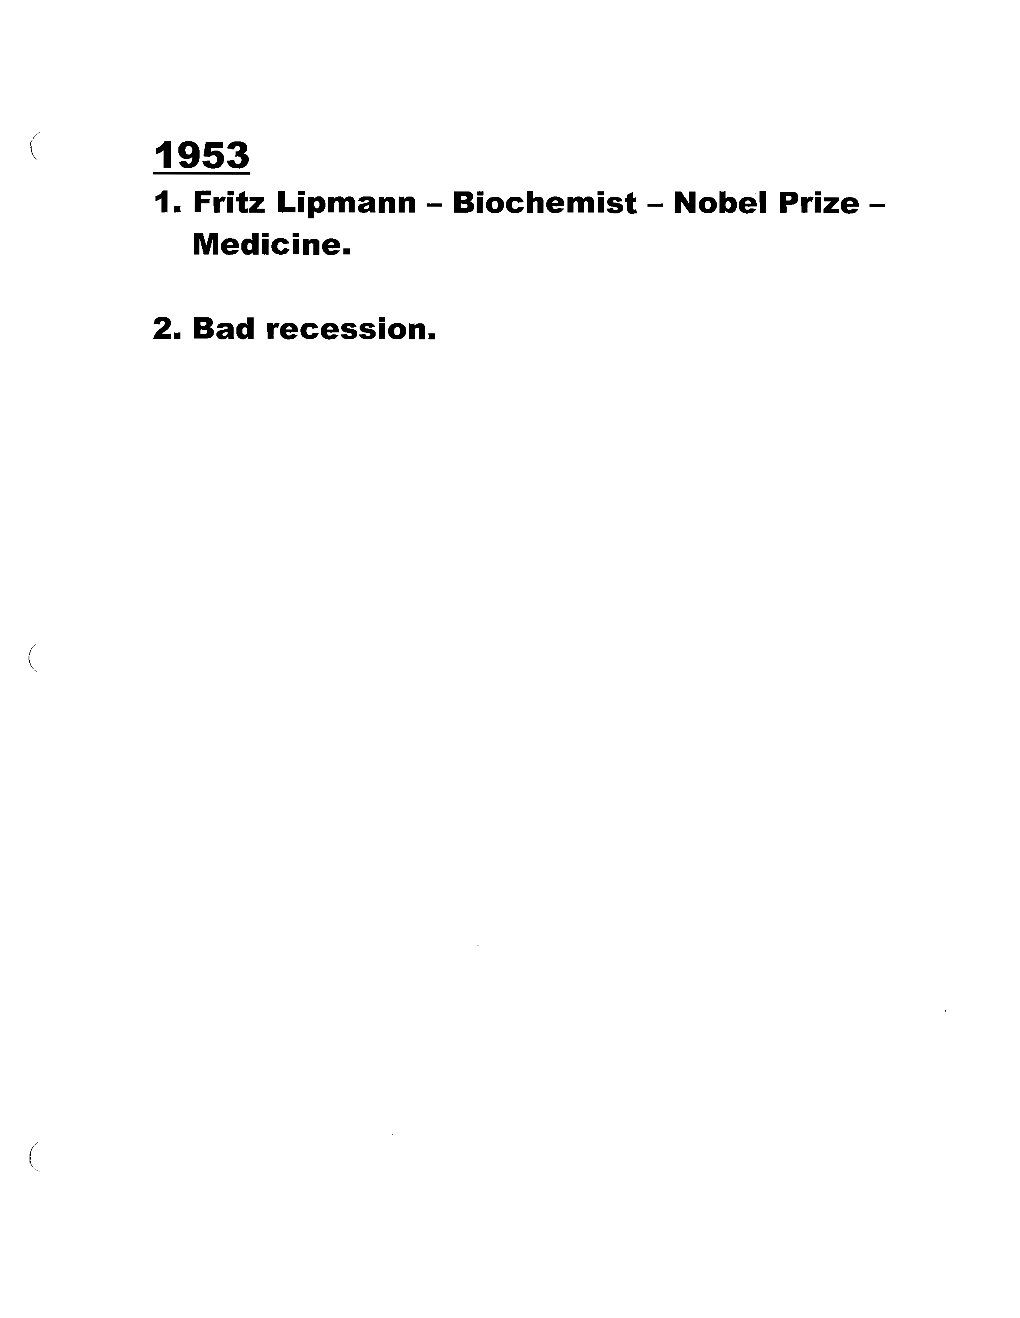 1. Fritz Lipmann - Biochemist - Nobel Prize - Medicine